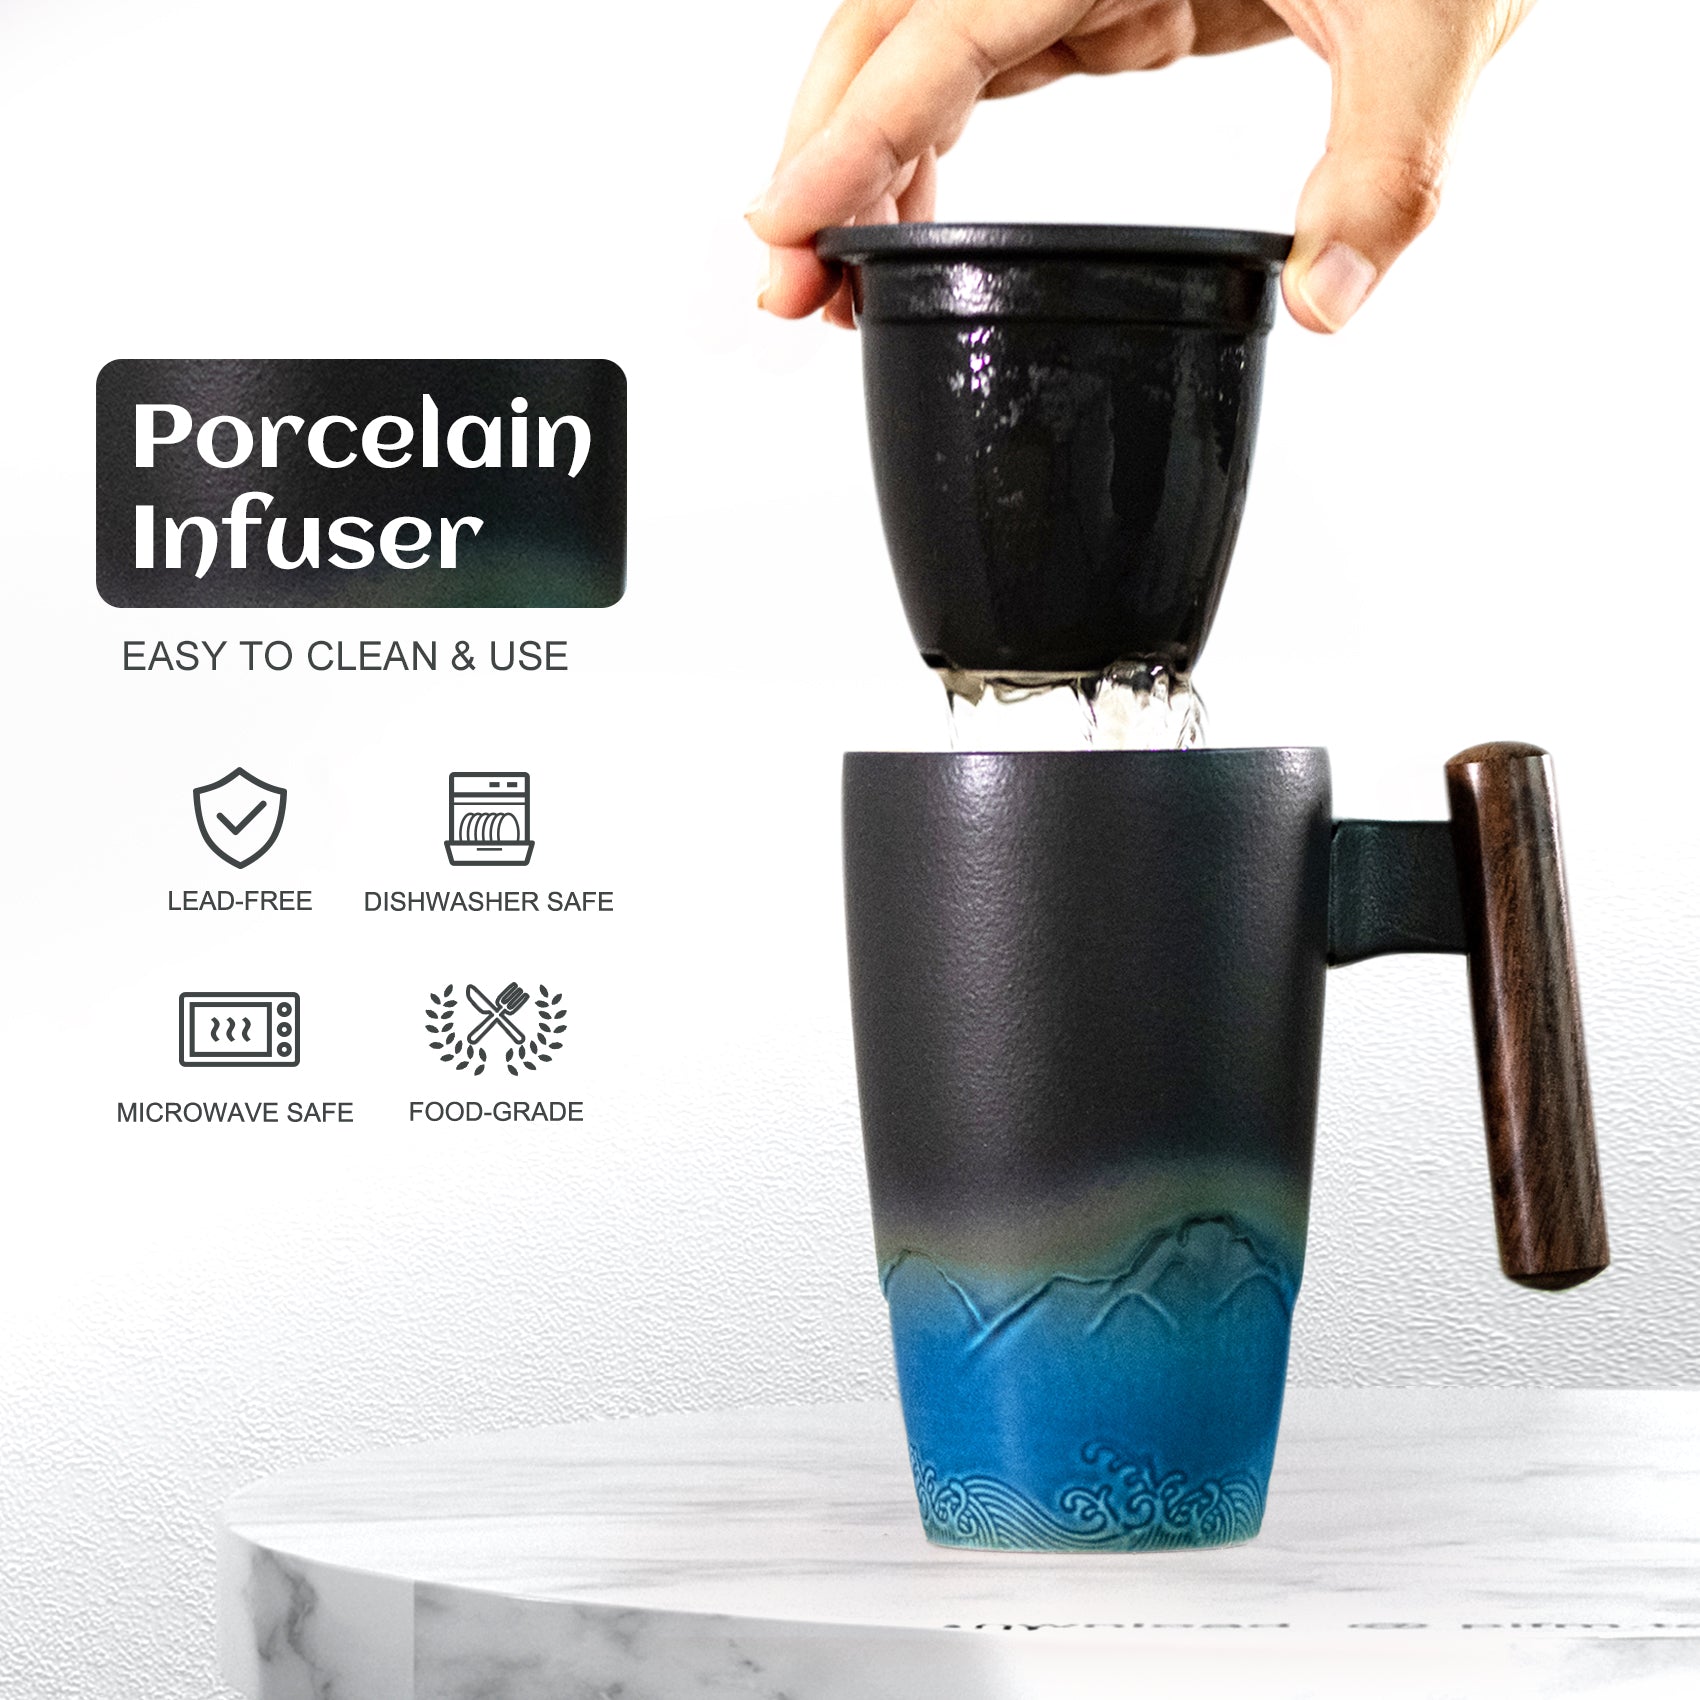 Ceramic Tea Cup with Infuser and Lid, Tea Mug for Loose Tea 365ml/12oz 